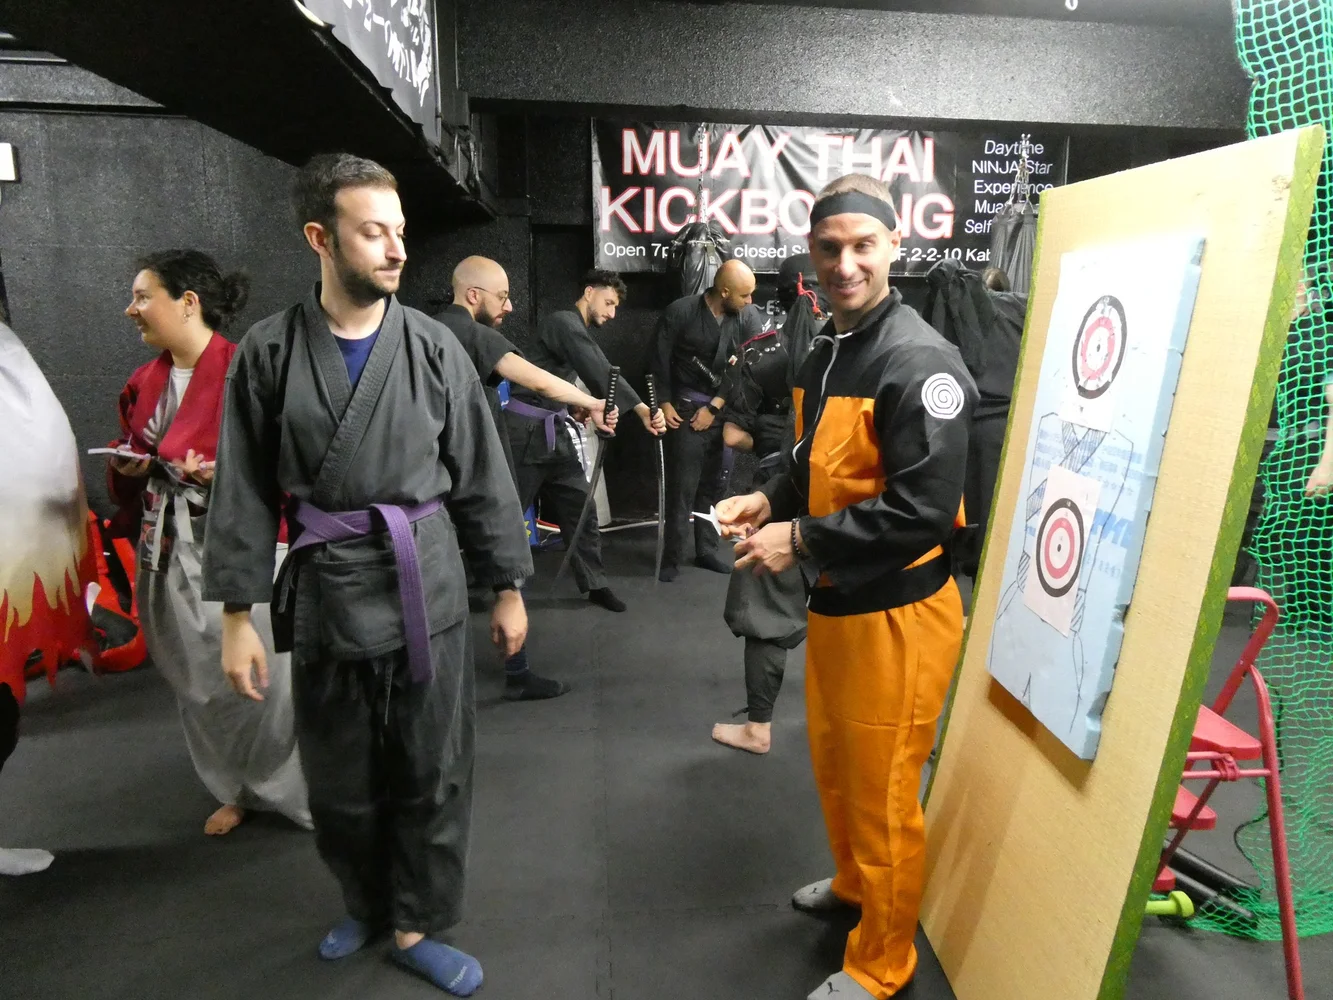 Ninja Skills and Shuriken Experience in Shinjuku